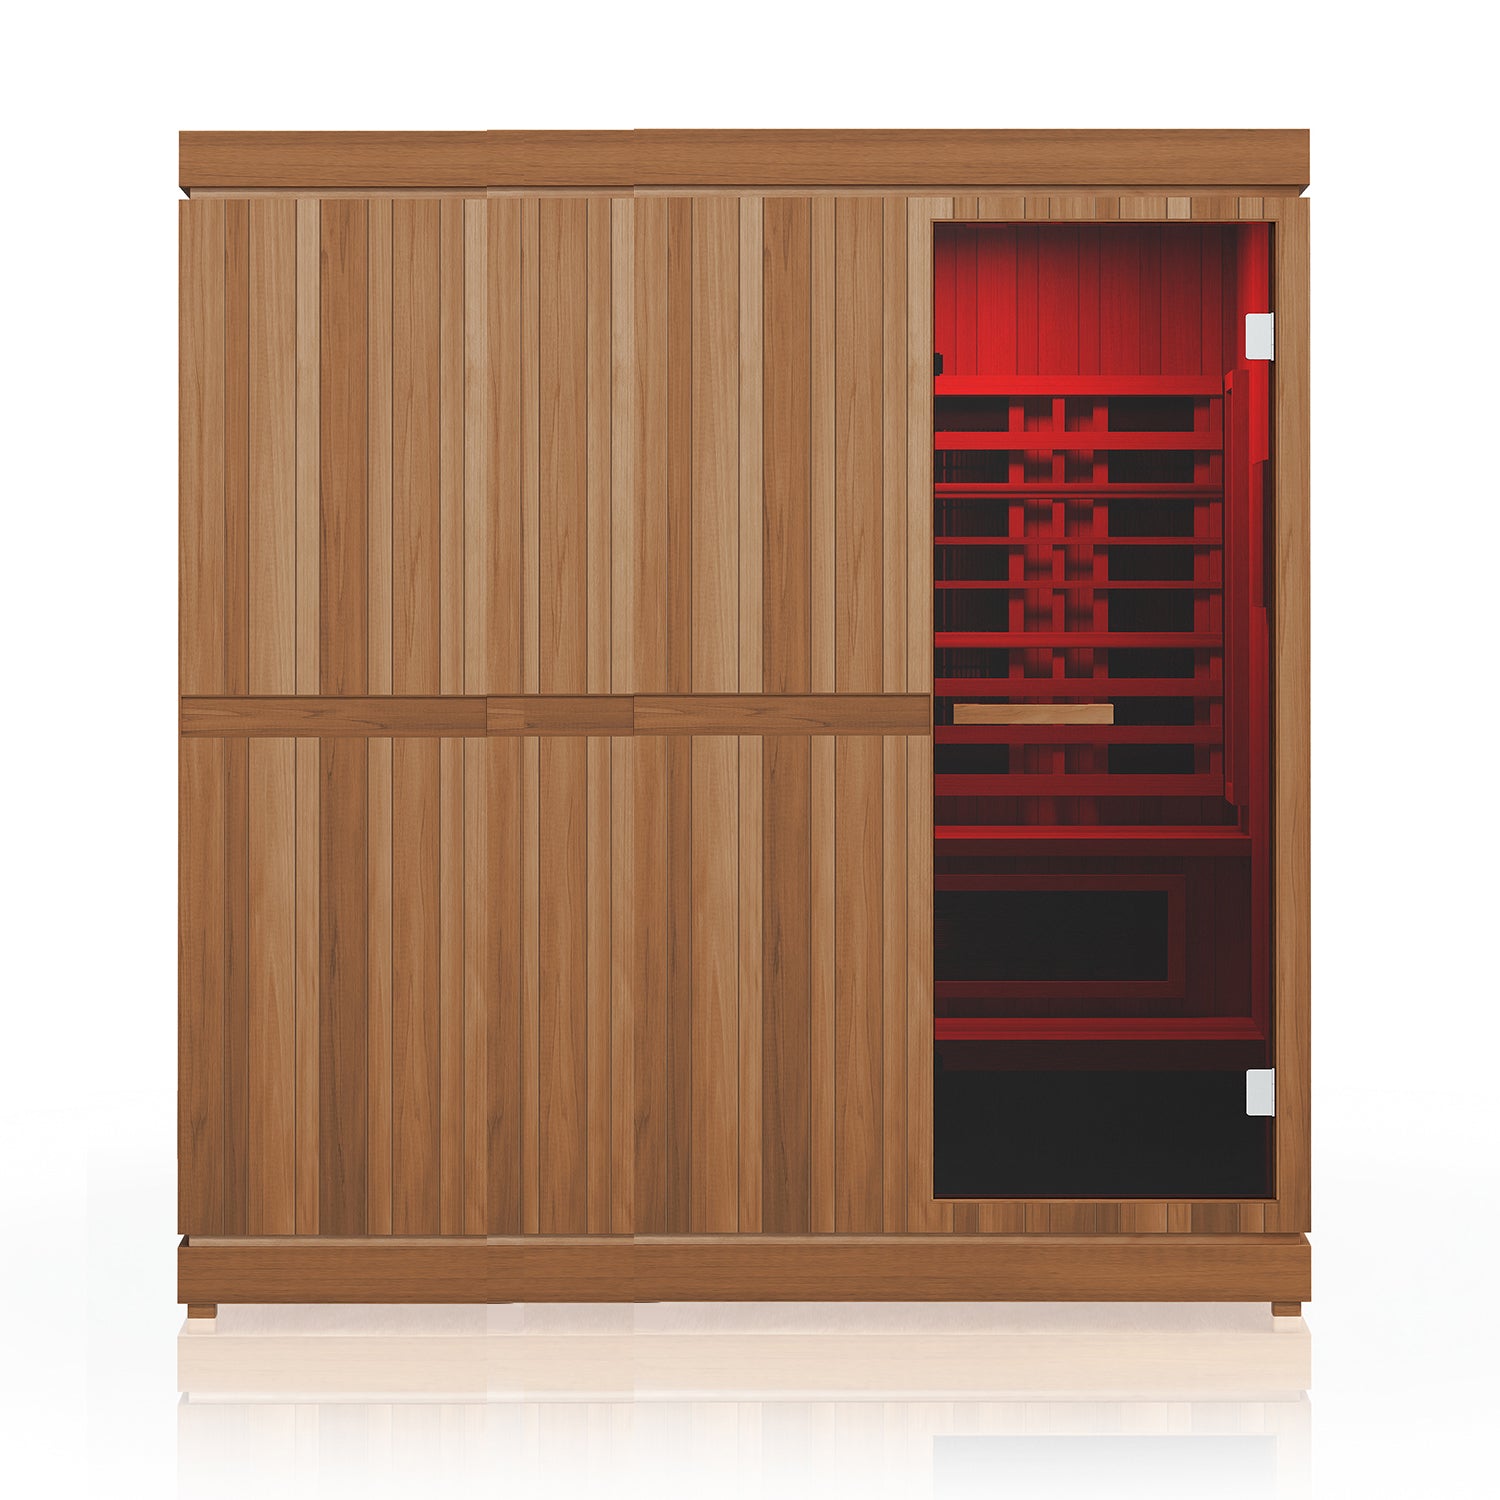 Finnmark Designs Trinity XL 4-Person Infrared & Traditional Steam Combo Sauna | FD-5